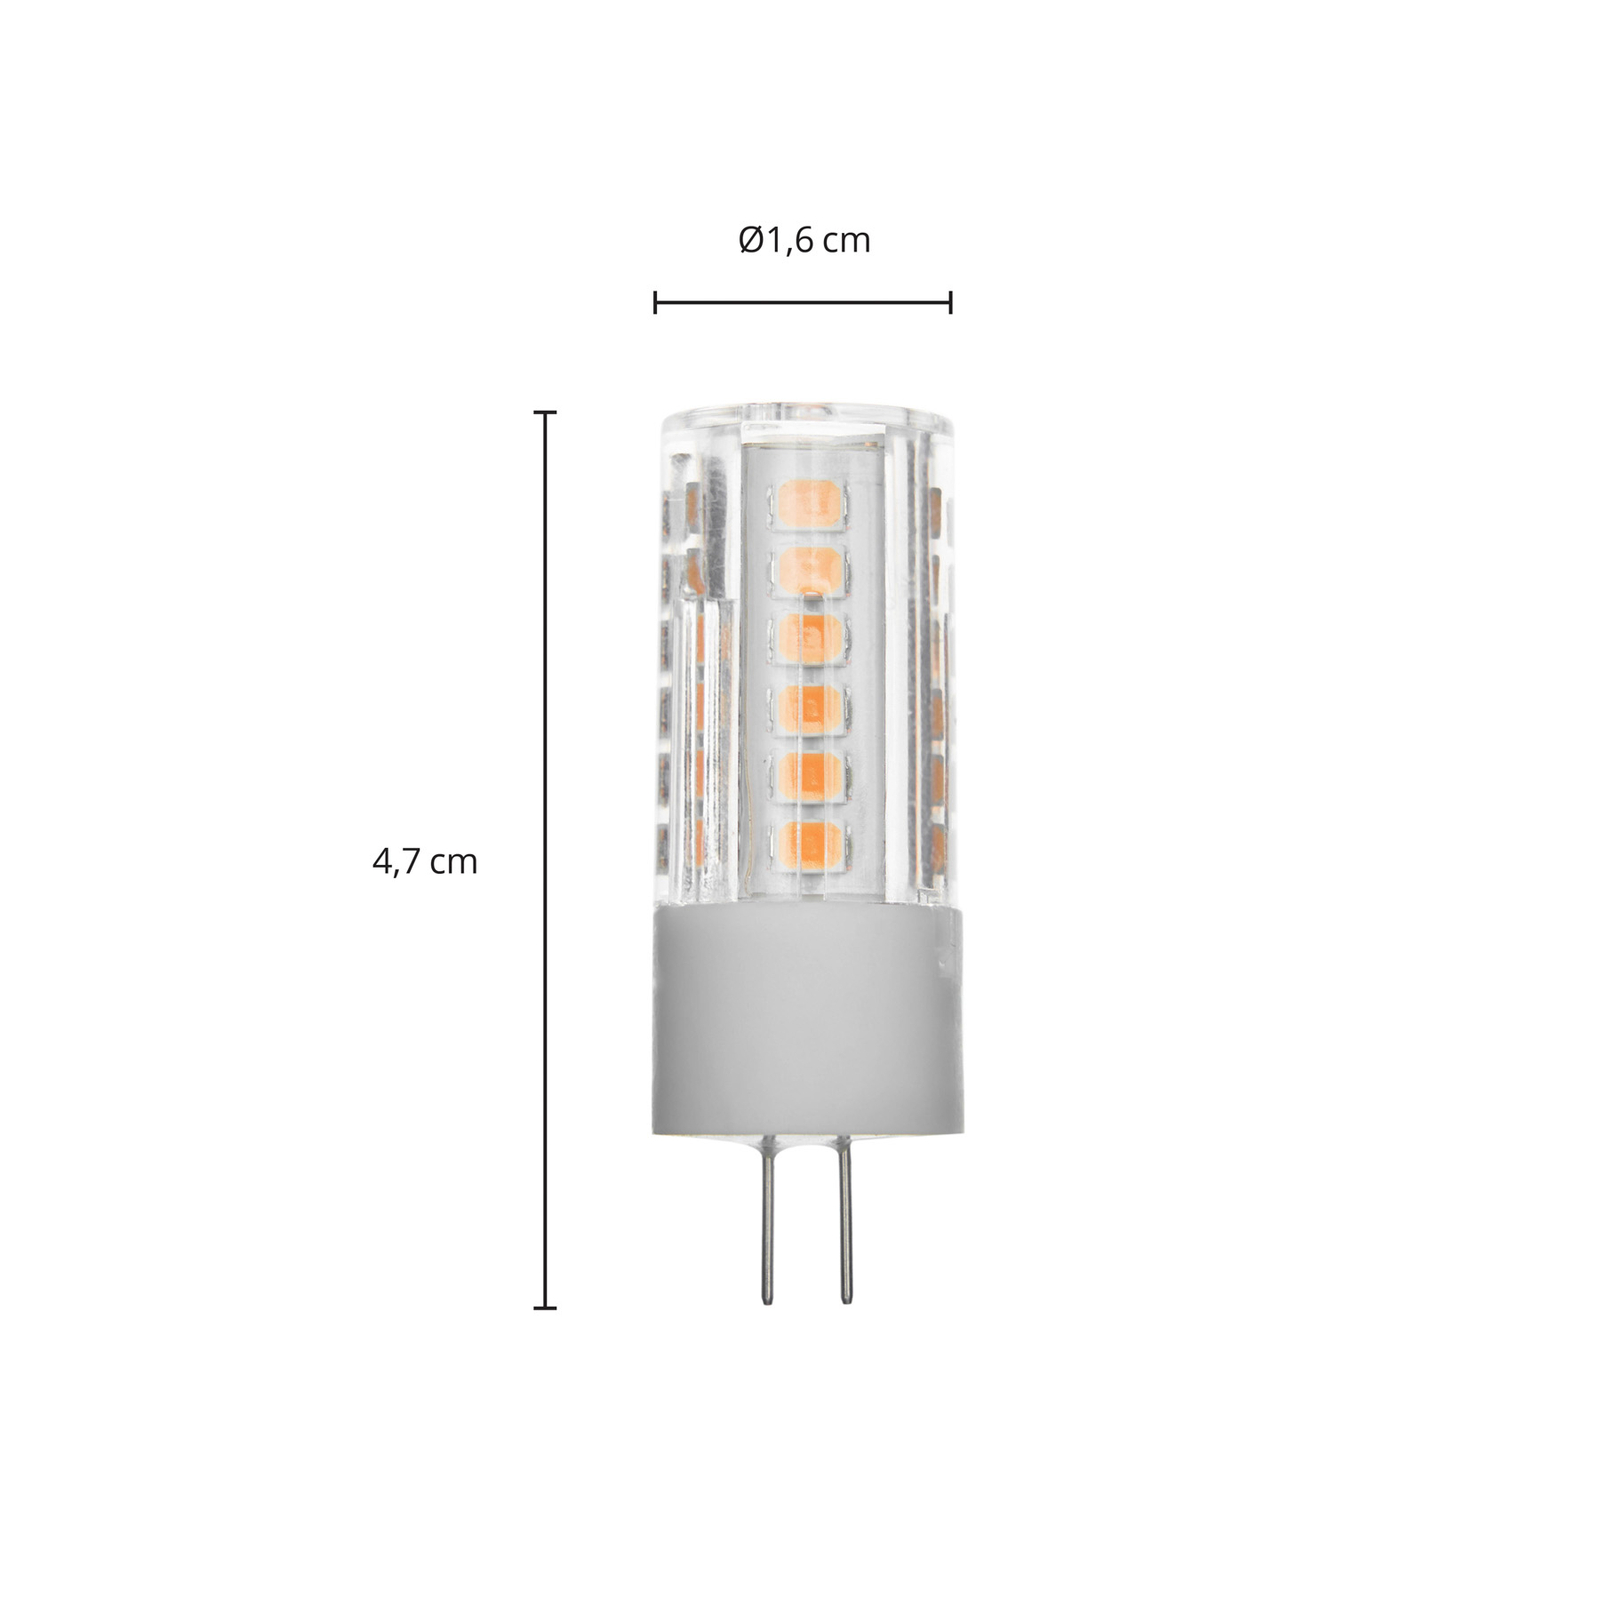 Arcchio bi-pin LED bulb G4 3.4 W 2,700 K 4-pack